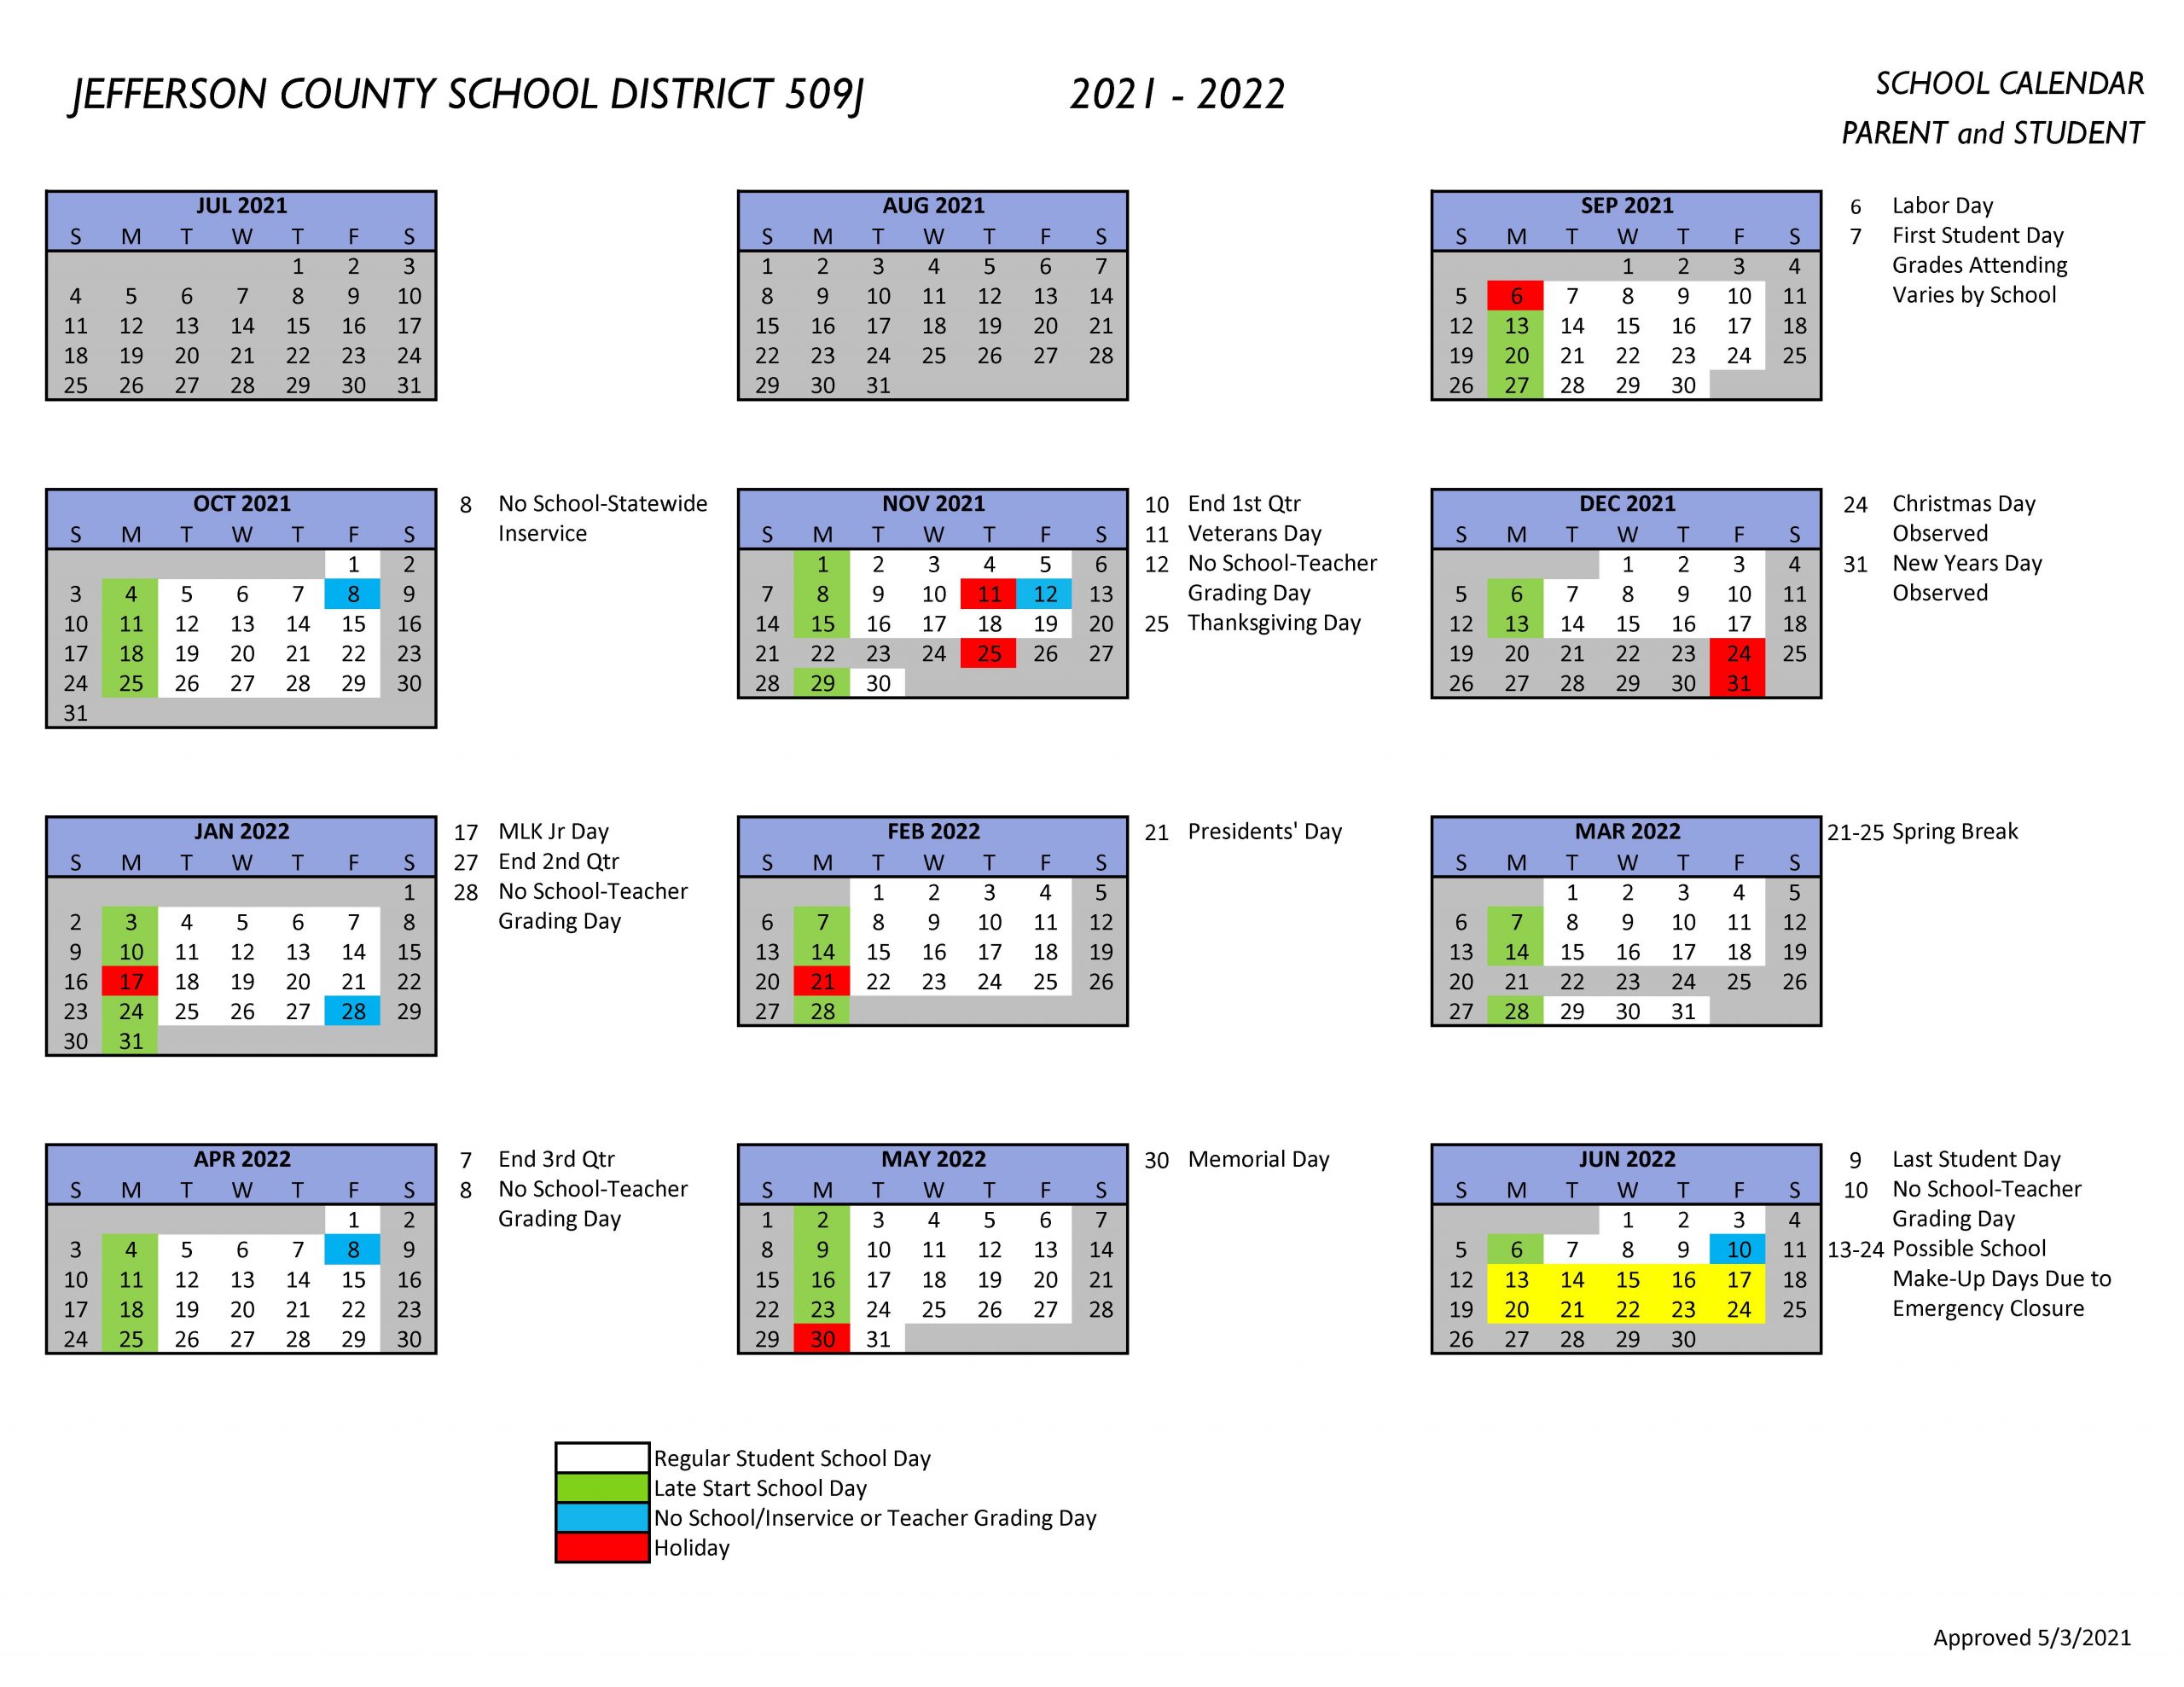 Jefferson County Schools Calendar 2022